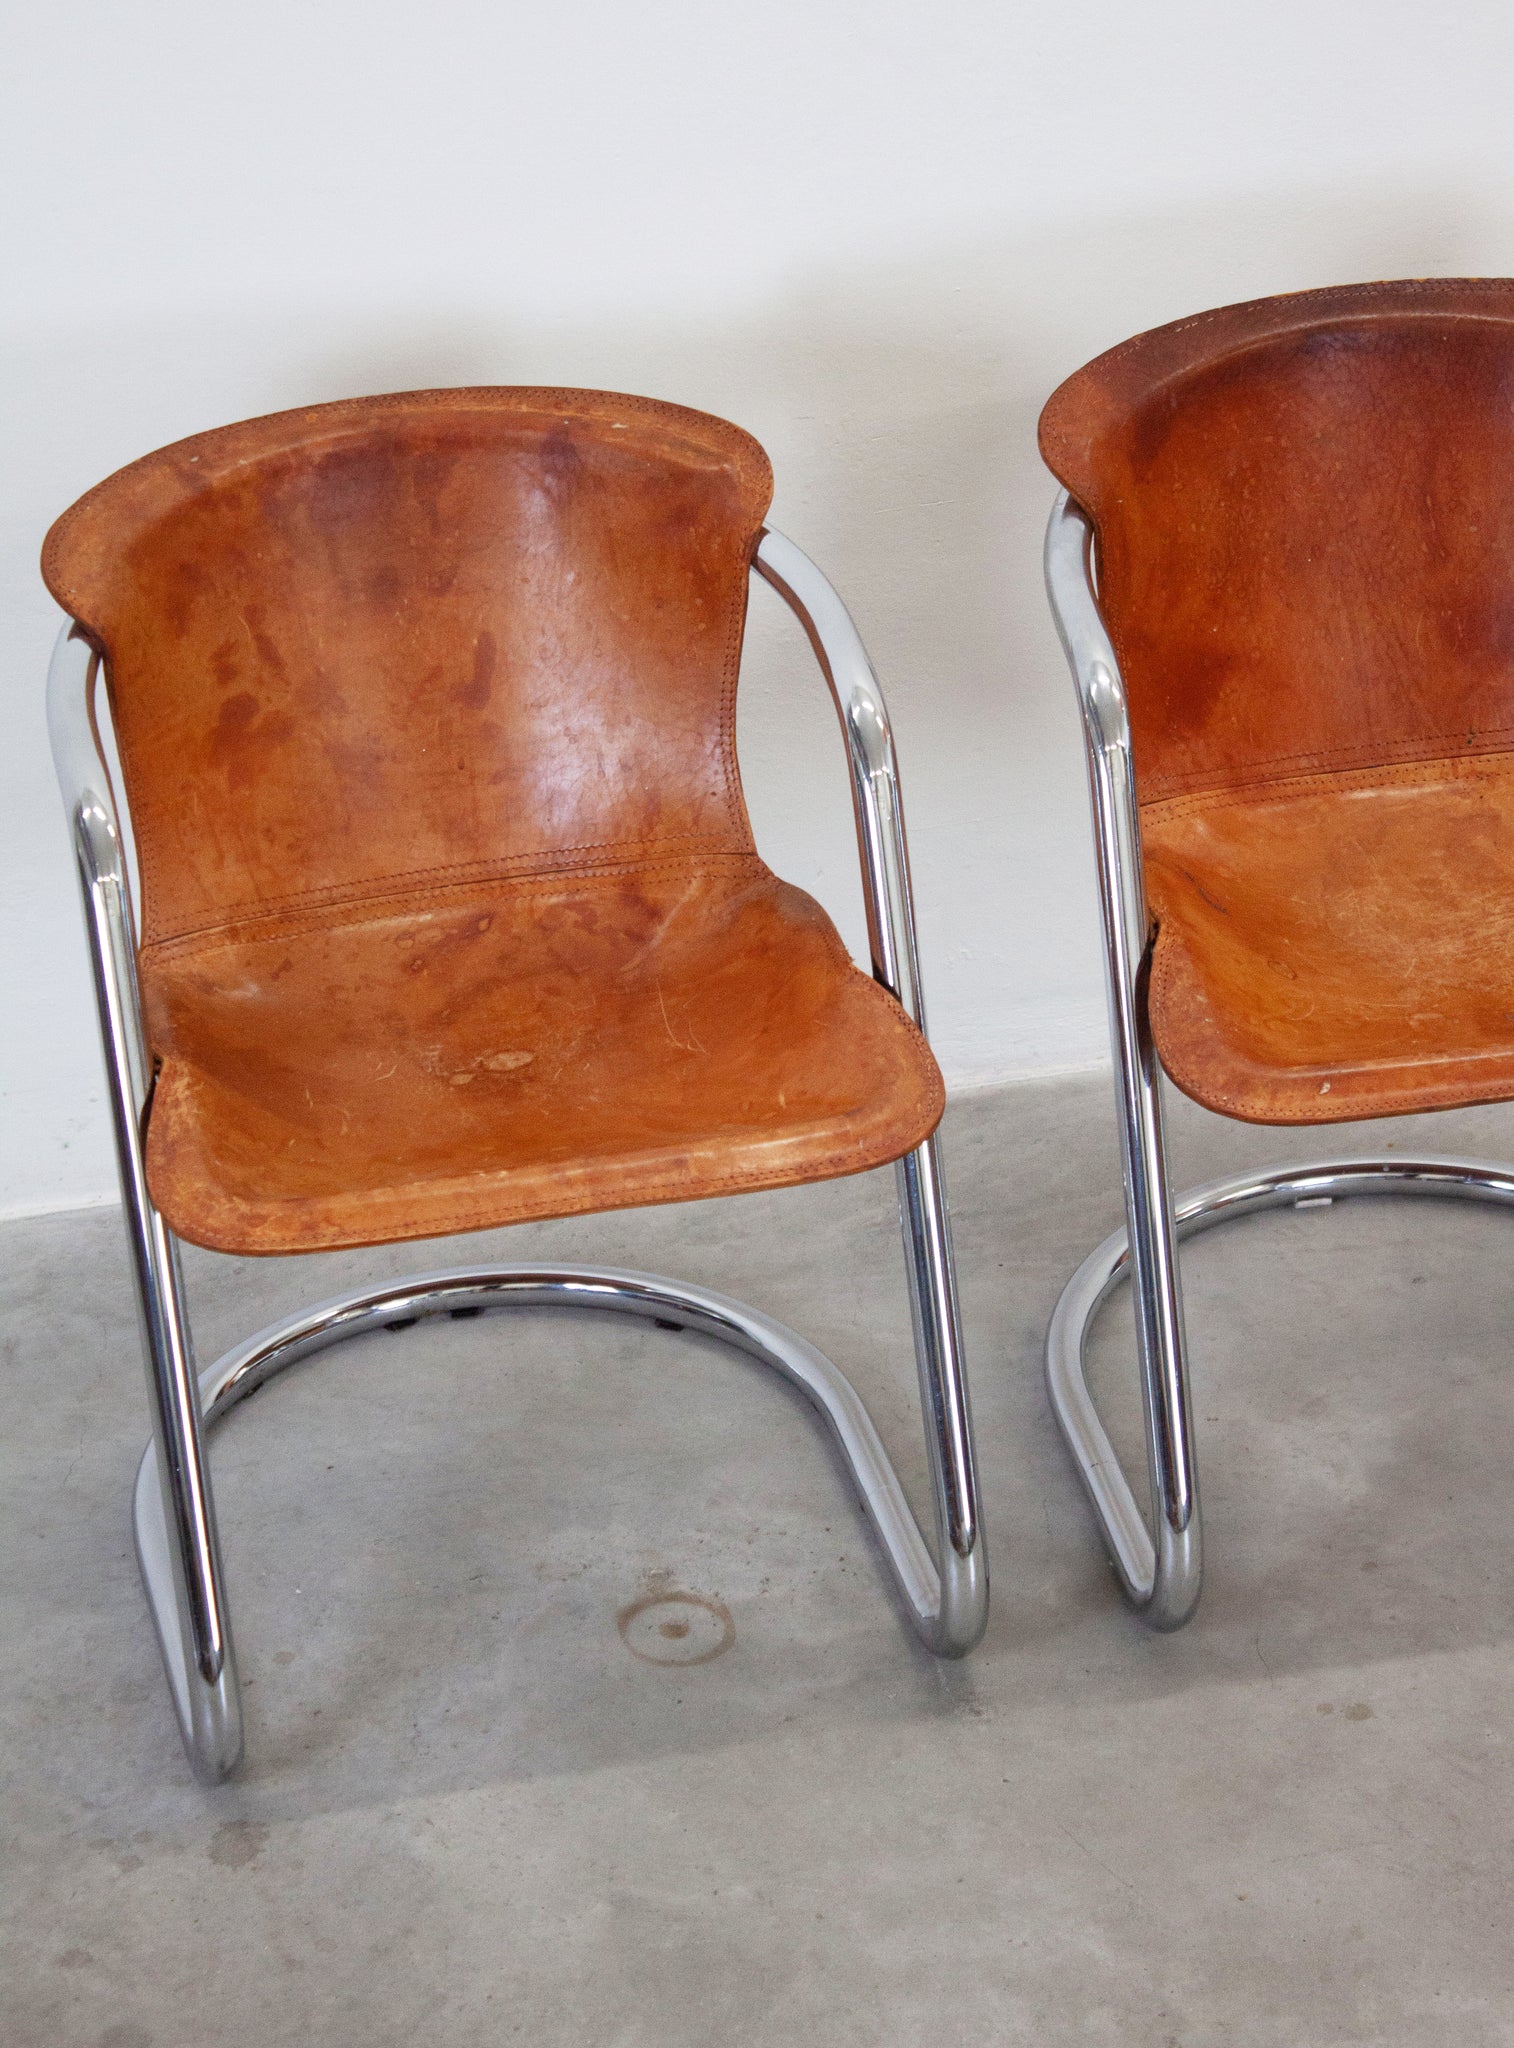 Metaform Tubular Chrome Dining Chairs (Cognac)